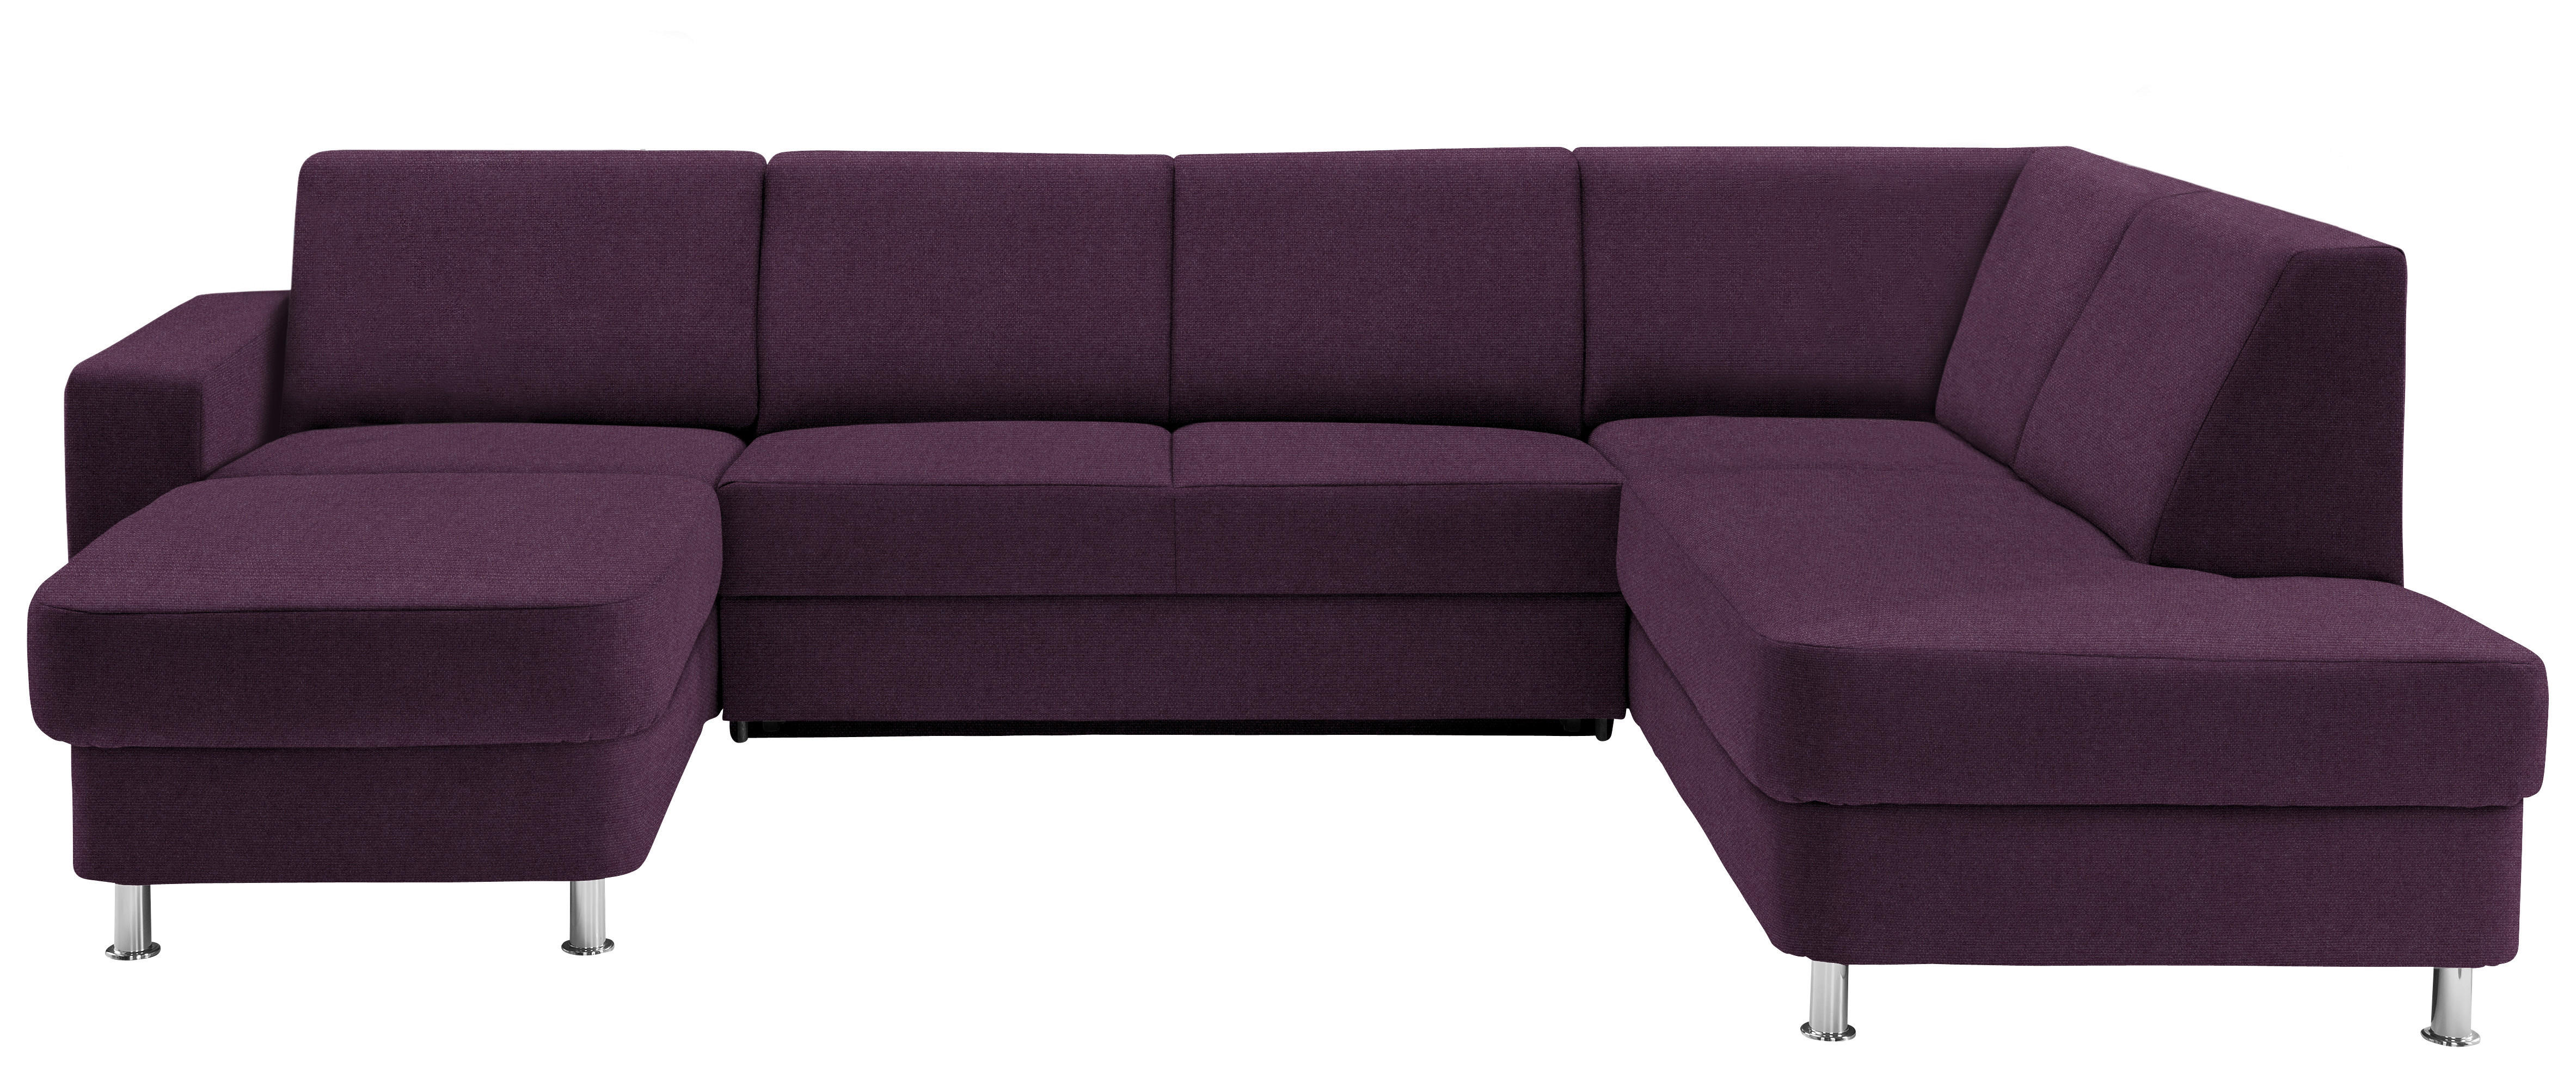 WOHNLANDSCHAFT in Chenille Lila, Violett  - Chromfarben/Lila, Design, Kunststoff/Textil (165cm) - Xora